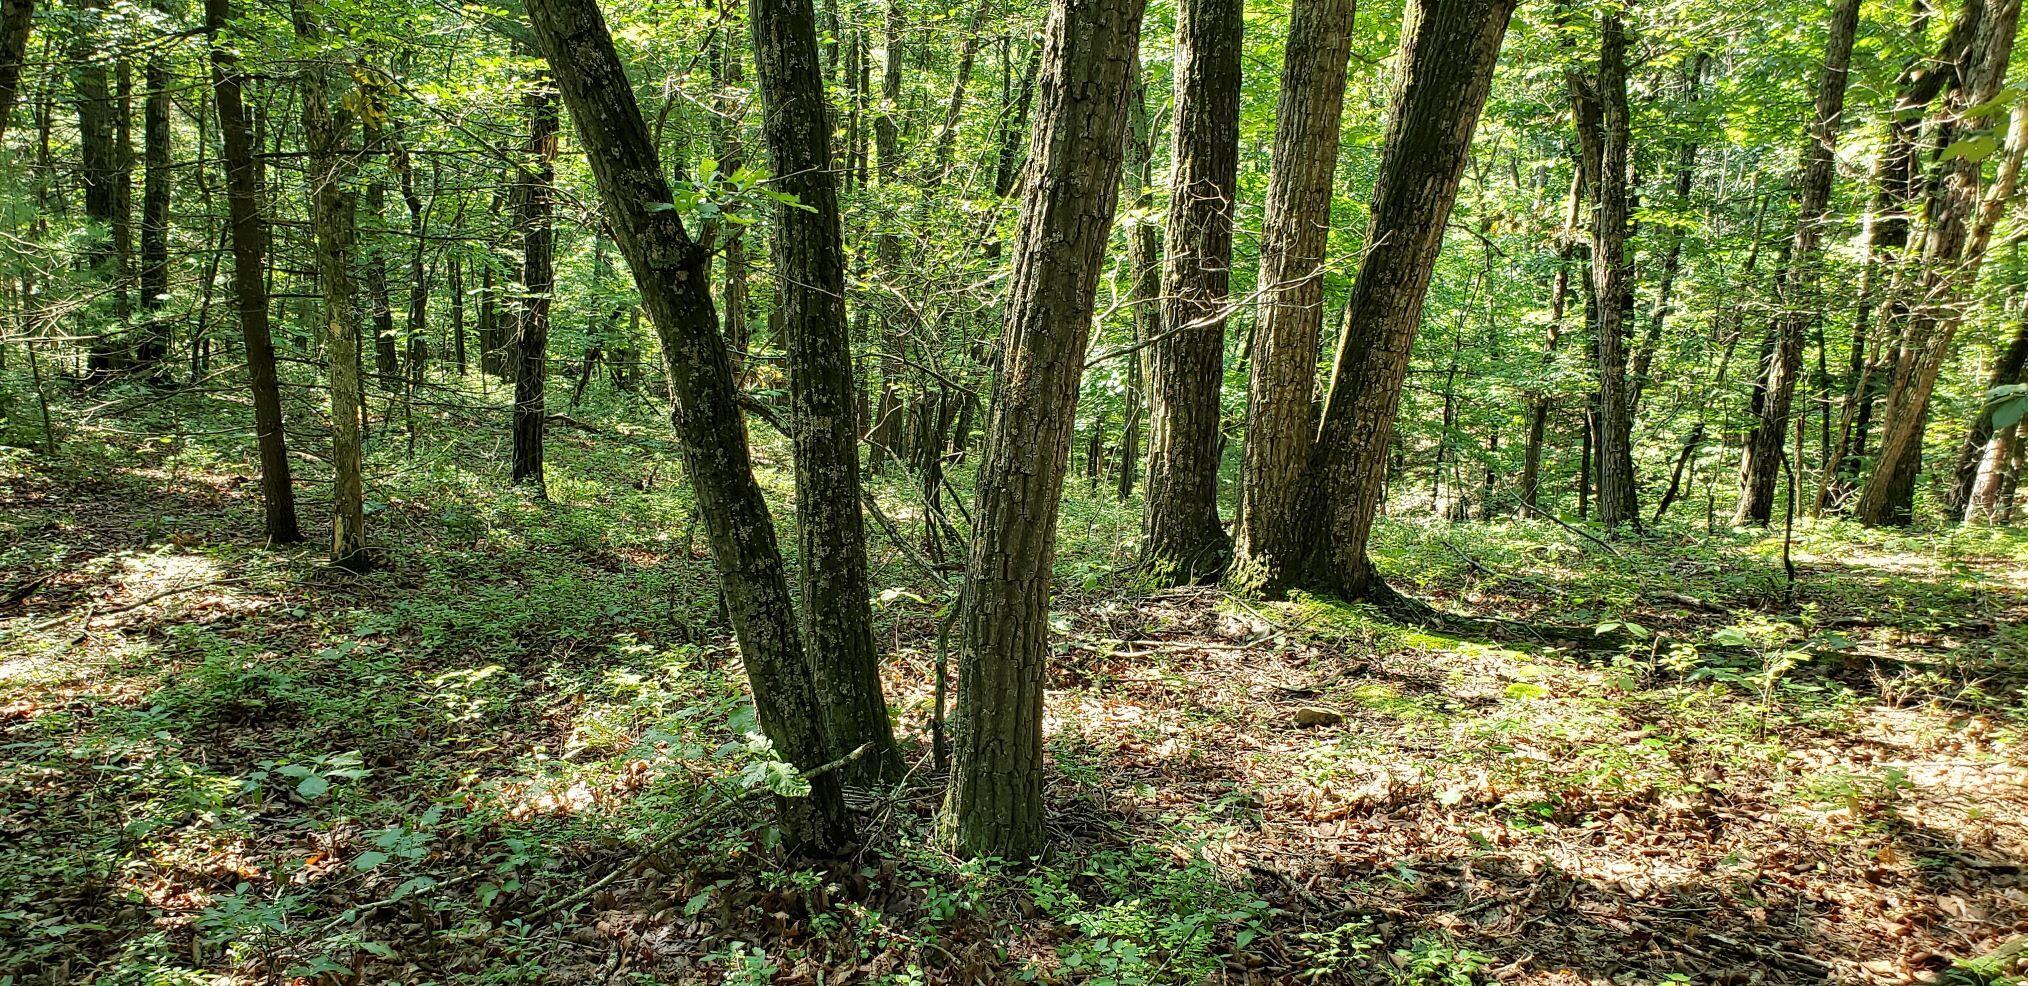 Multi-stemmed chestnut oak in the George Washington National Forest © Chris Bolgiano